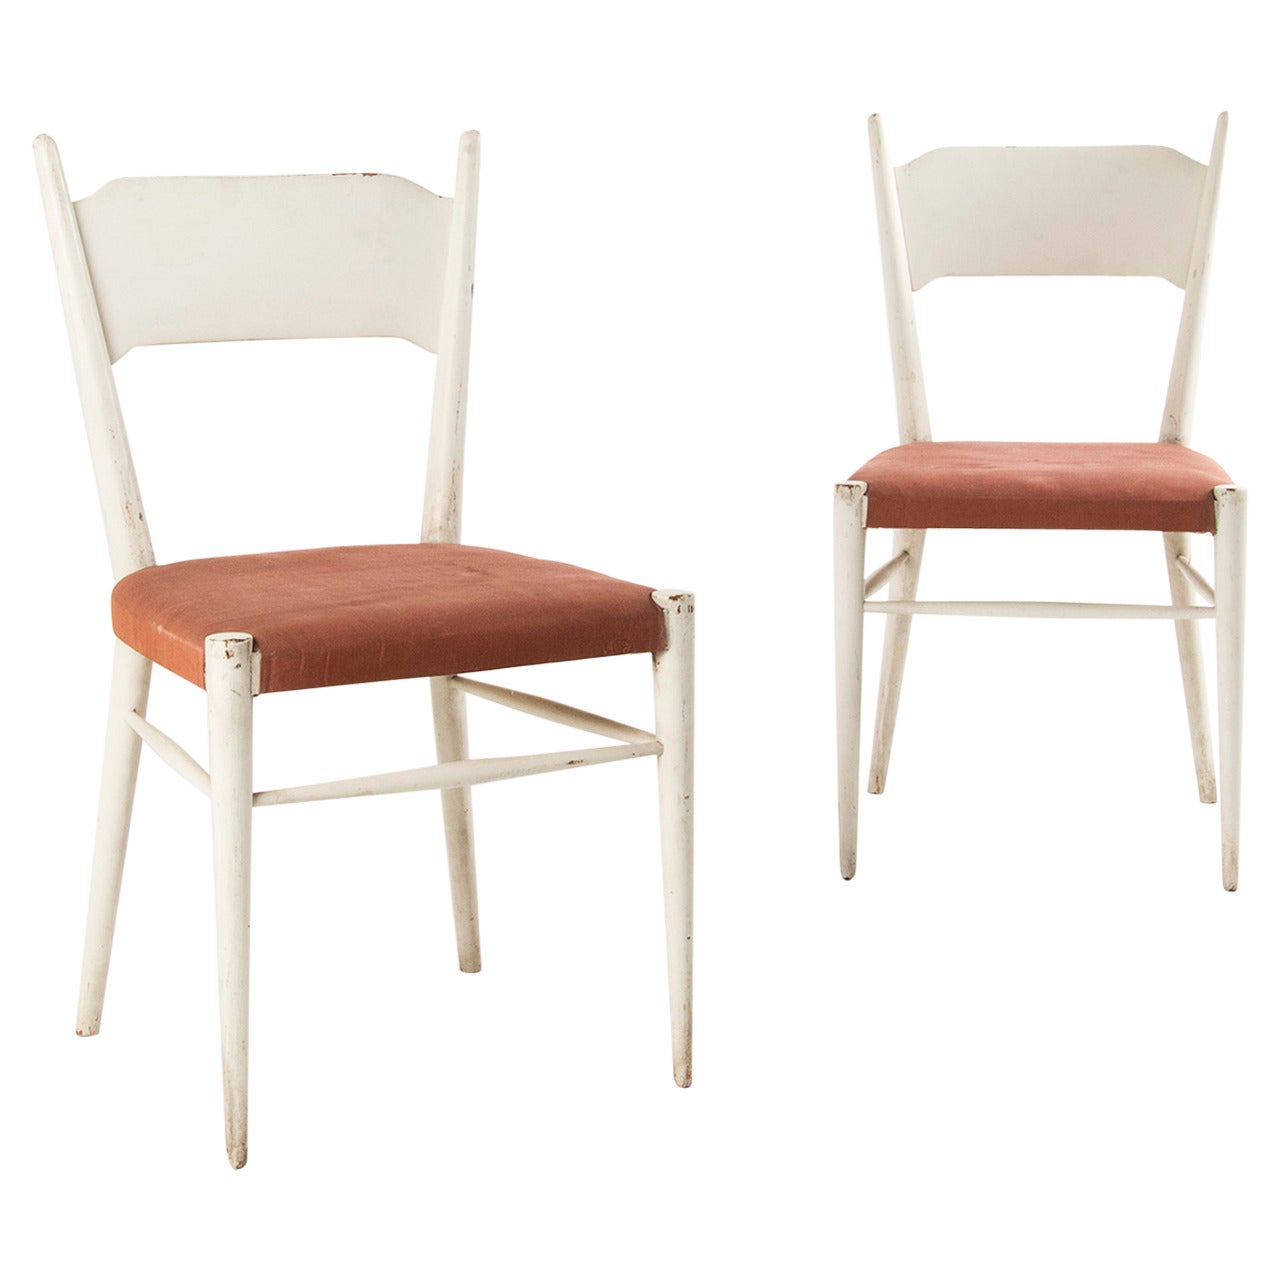 Pair of Chairs by Osvaldo Borsani for Arredamenti Borsani Varedo, 1950